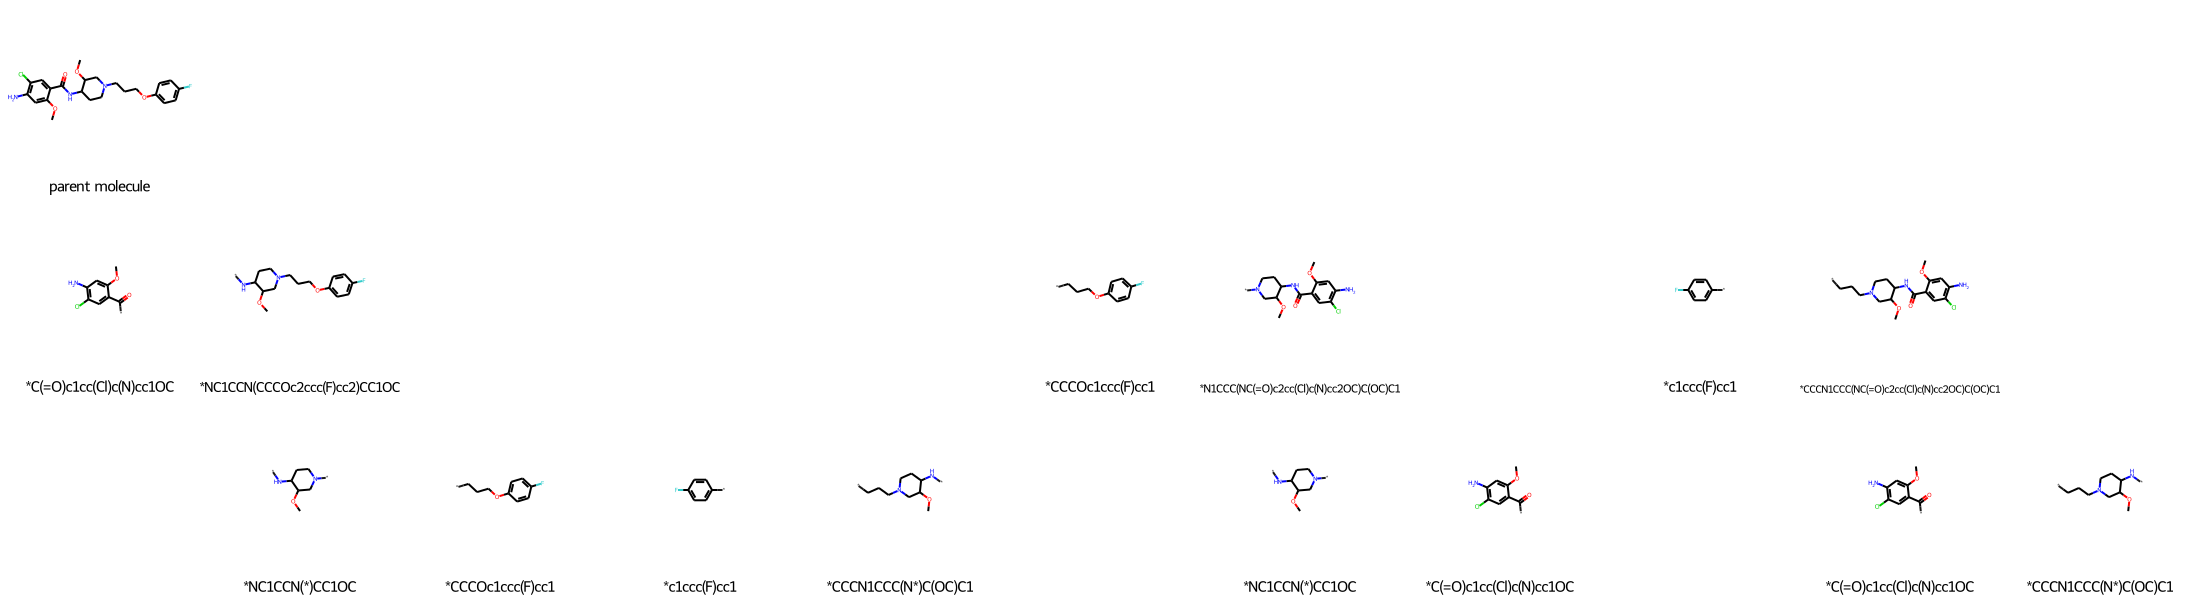 Hierarchy tree output from molecule_recap_tree function for complex parent molecule